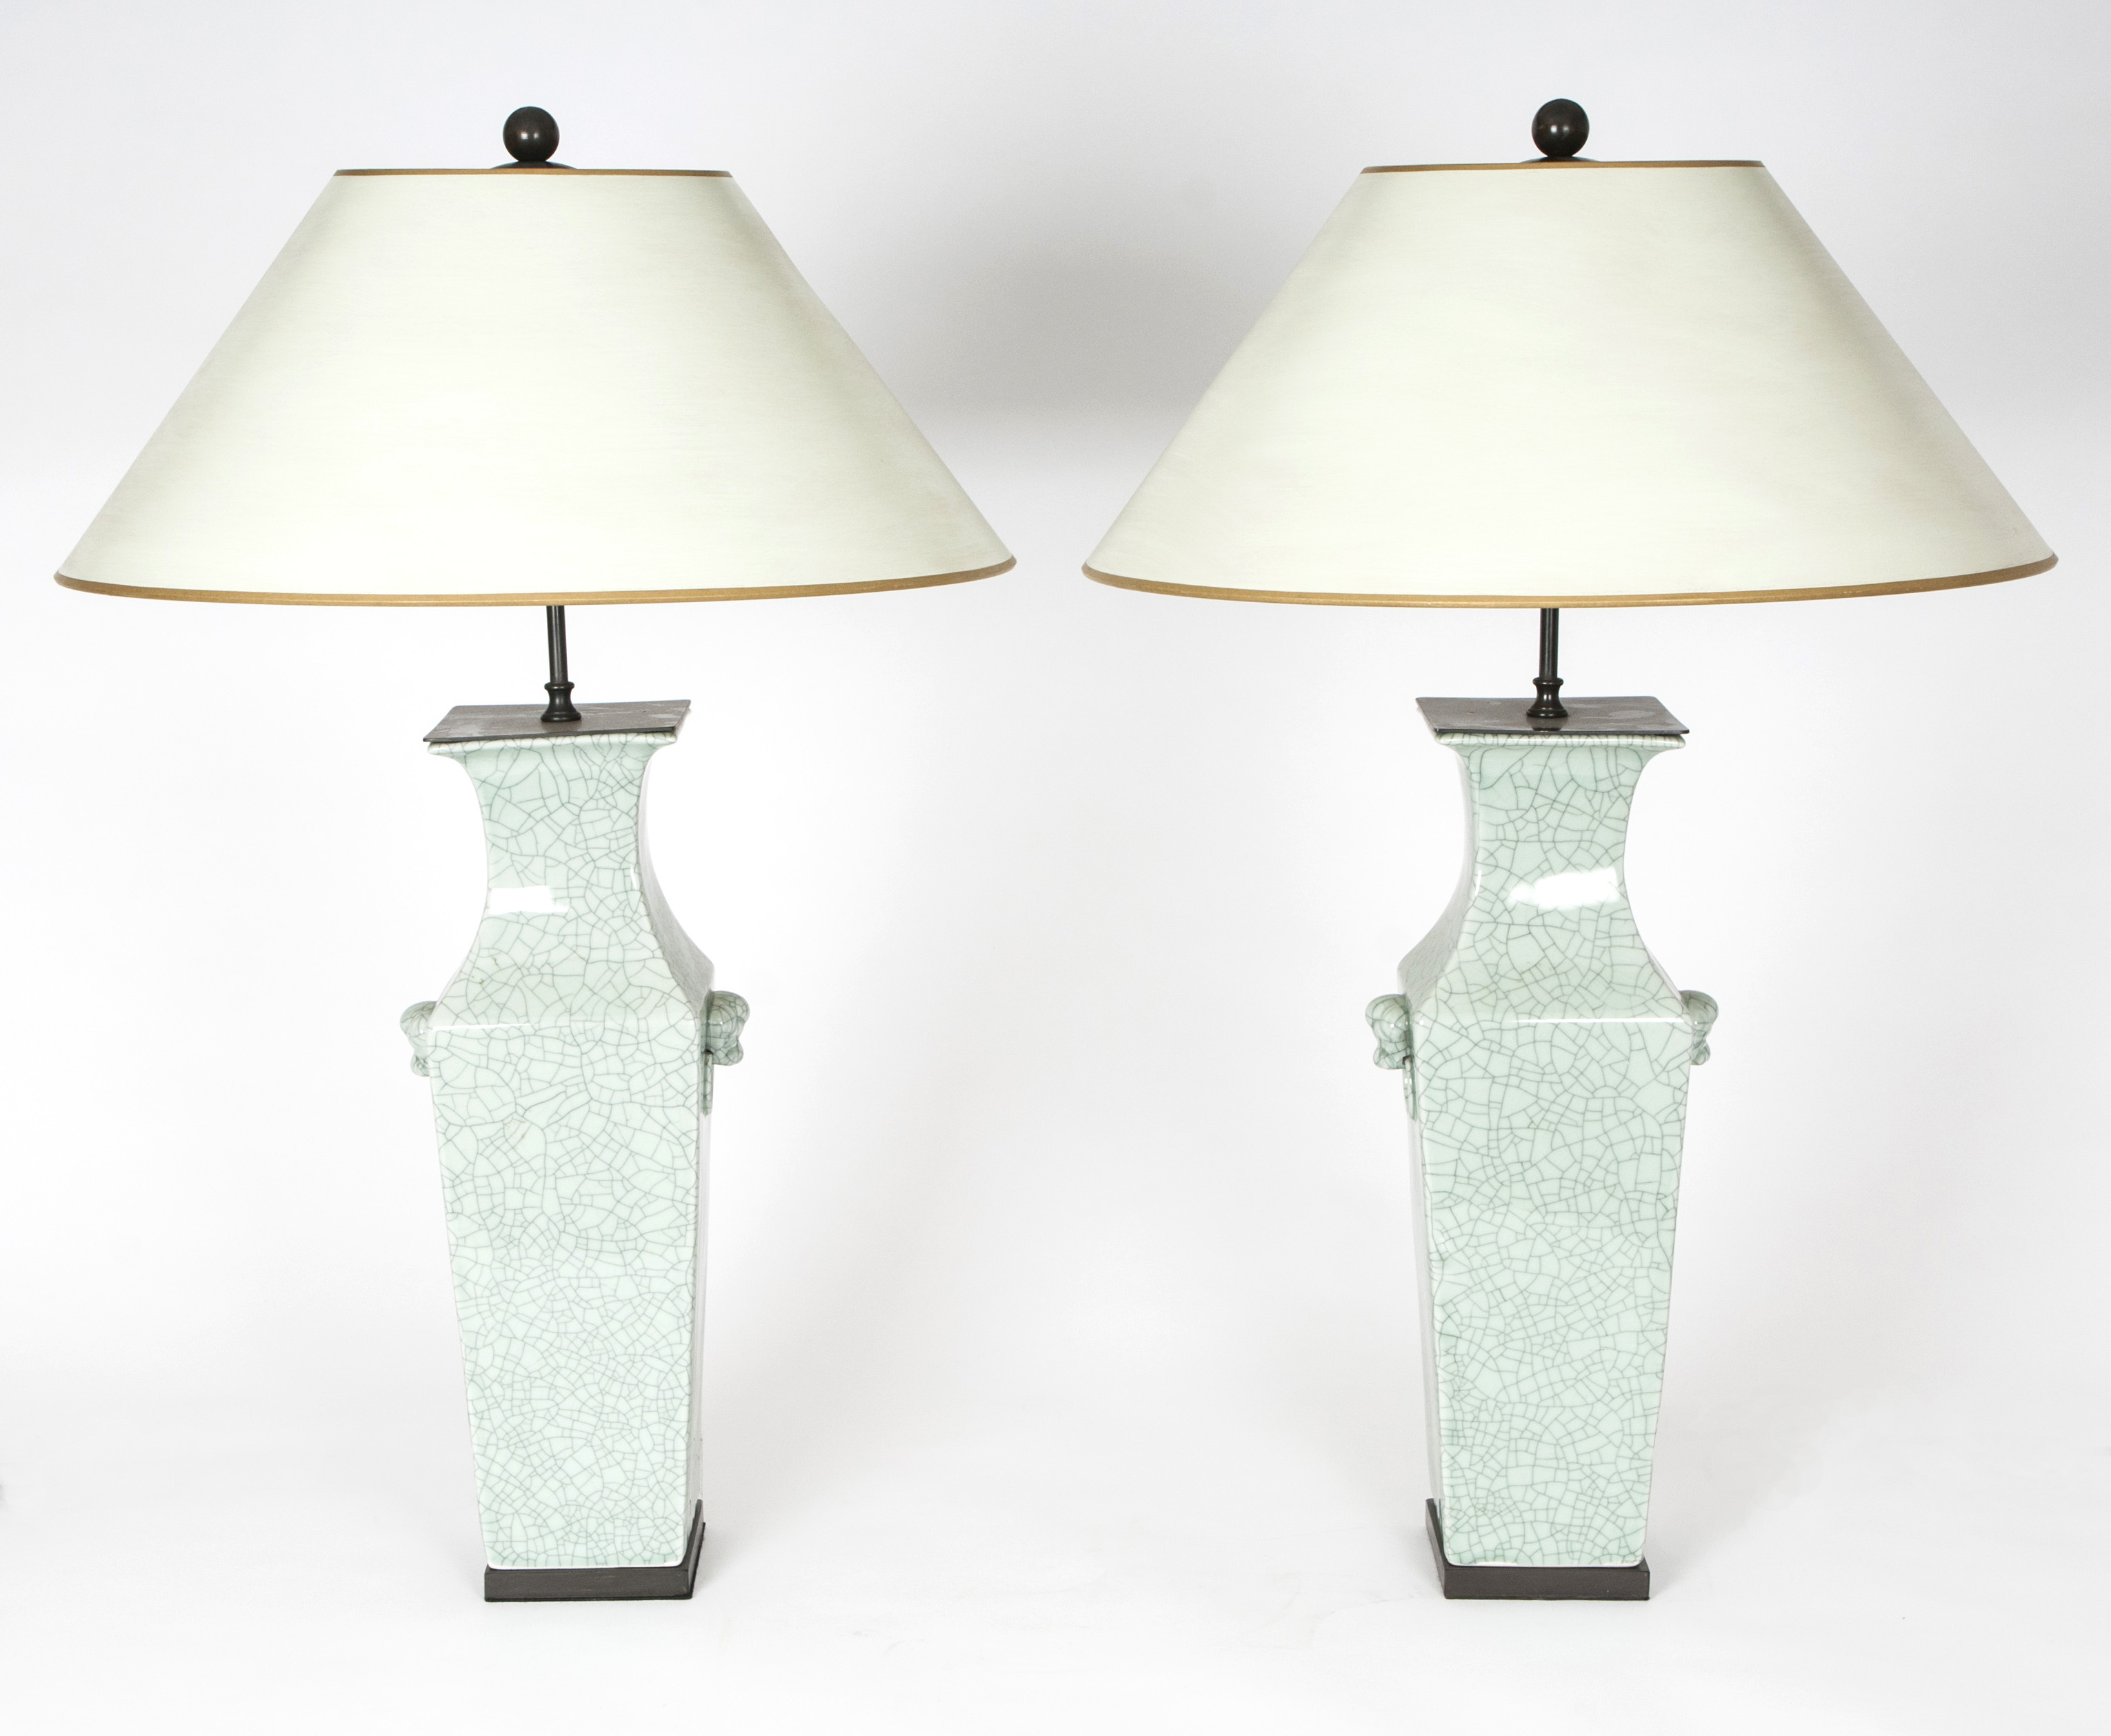 A pair of celadon lamps